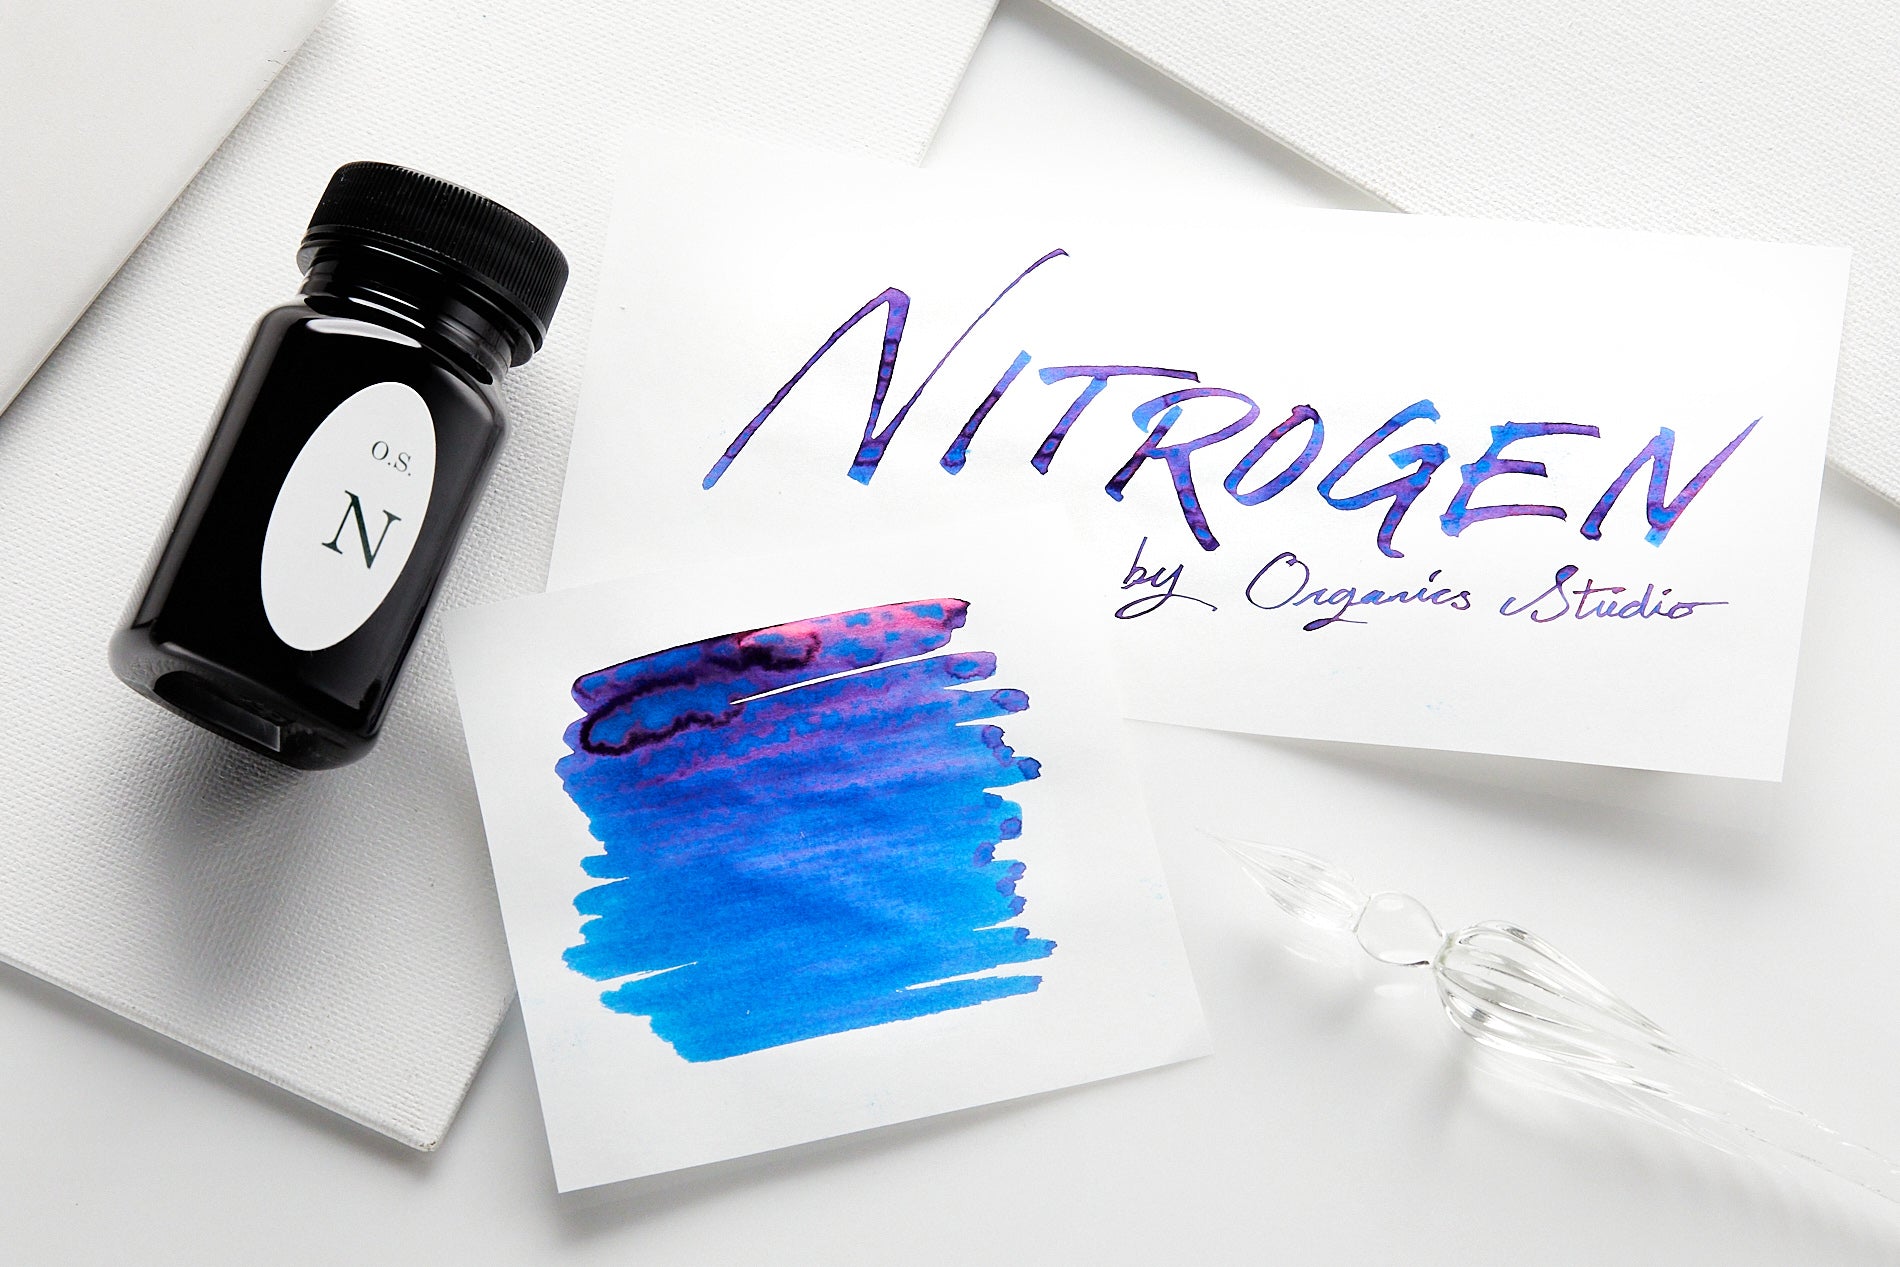 Organics Studios Nitrogen ink bottle, swab on white background with Nitrogen written off to the side on a white background